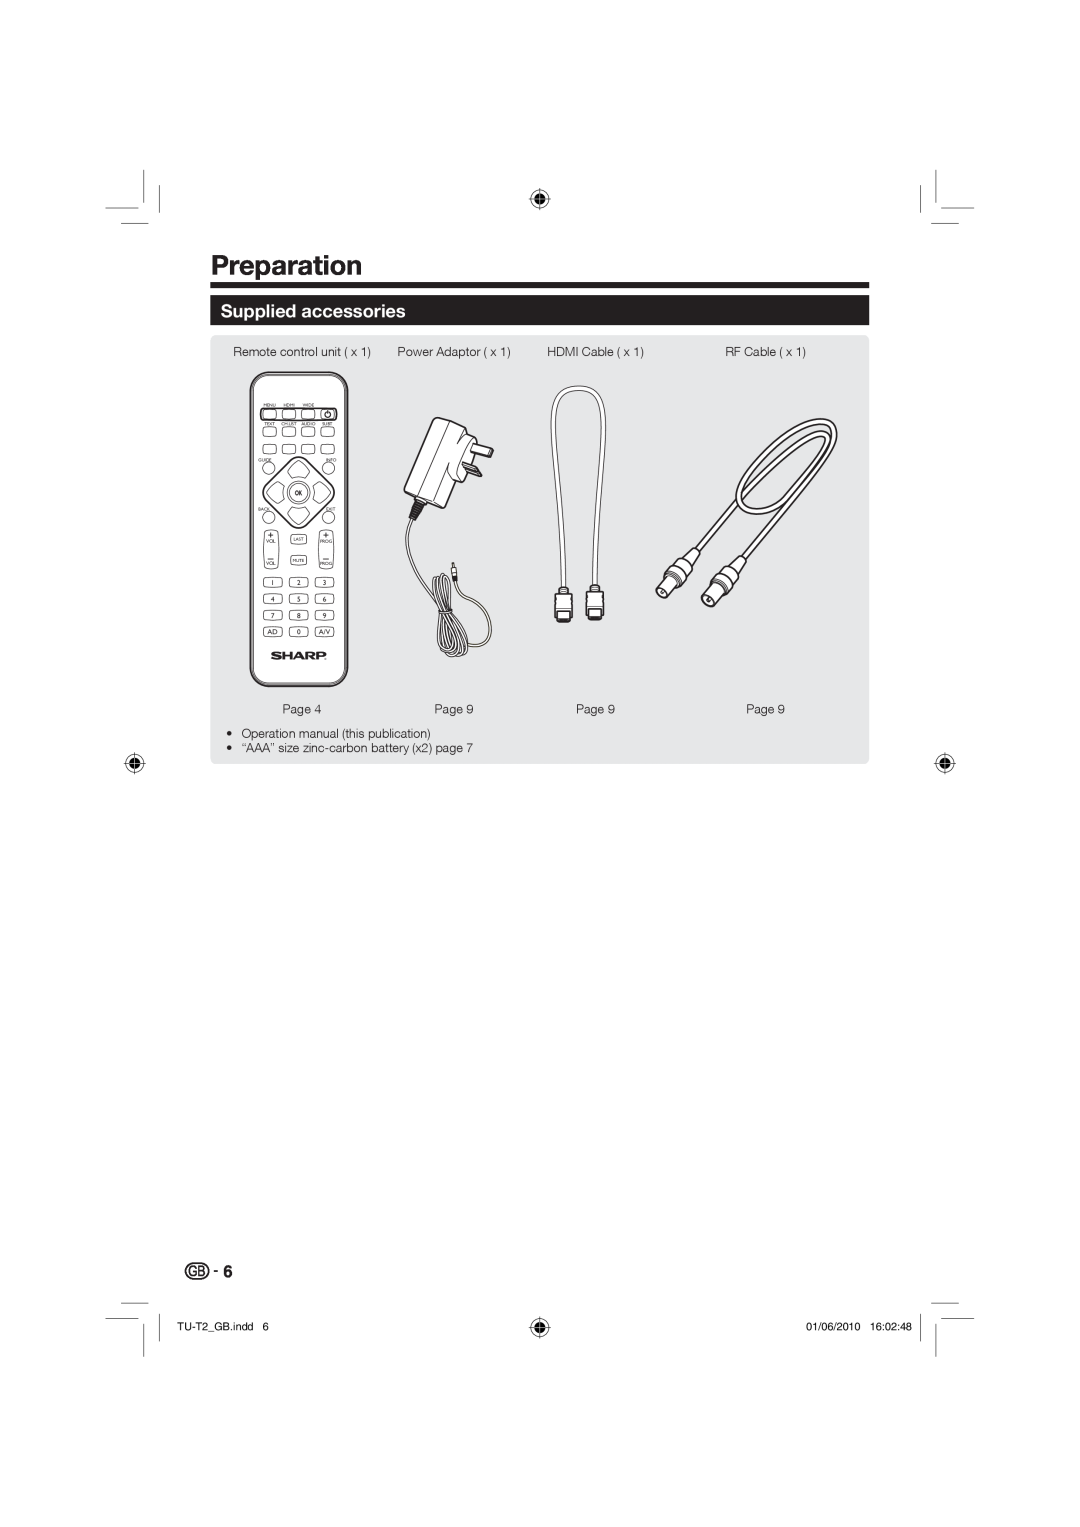 Sharp Preparation, Supplied accessories, TU-T2GB.indd, 01/06/2010, Menu, Hdmi, Wide, Text, Audio Subt, Guide, Info 